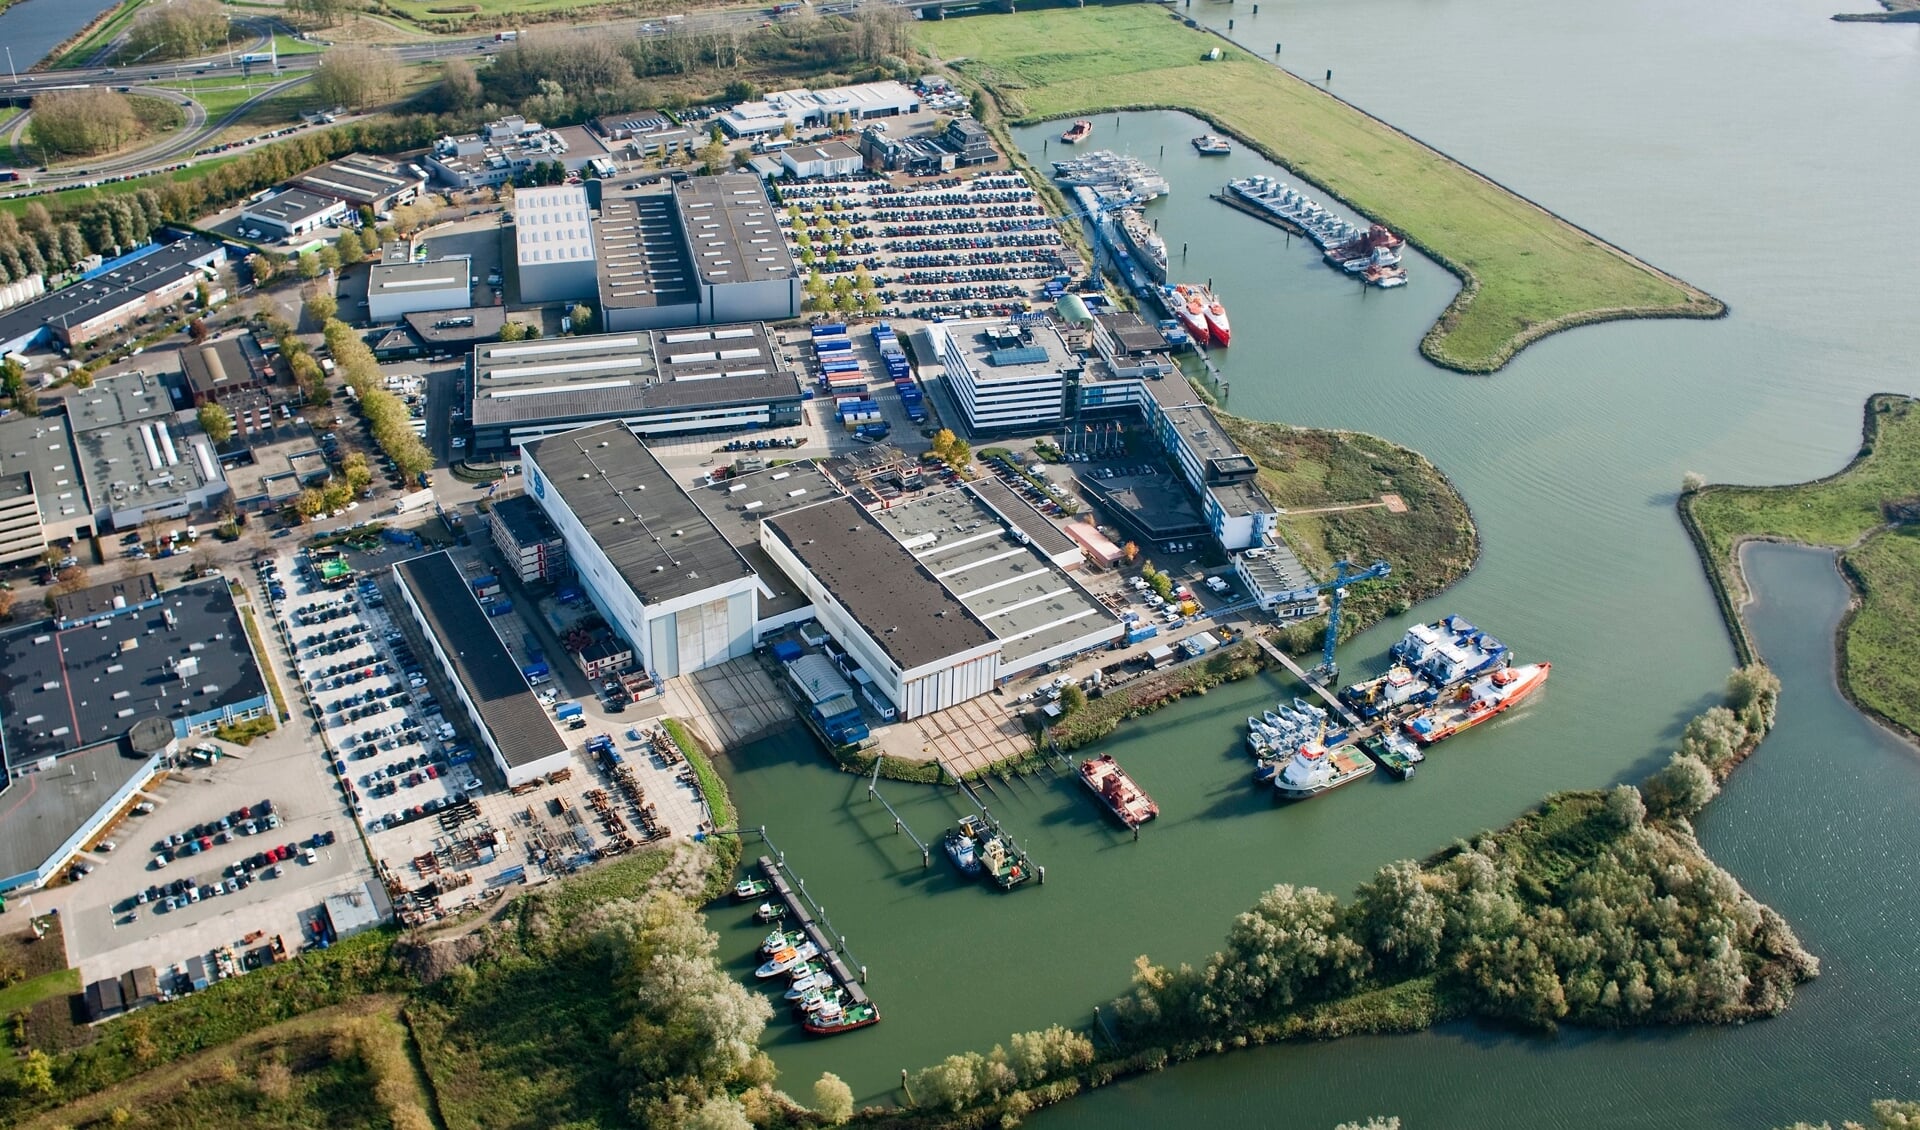  Damen Shipyards Gorinchem wordt uitgebreid.